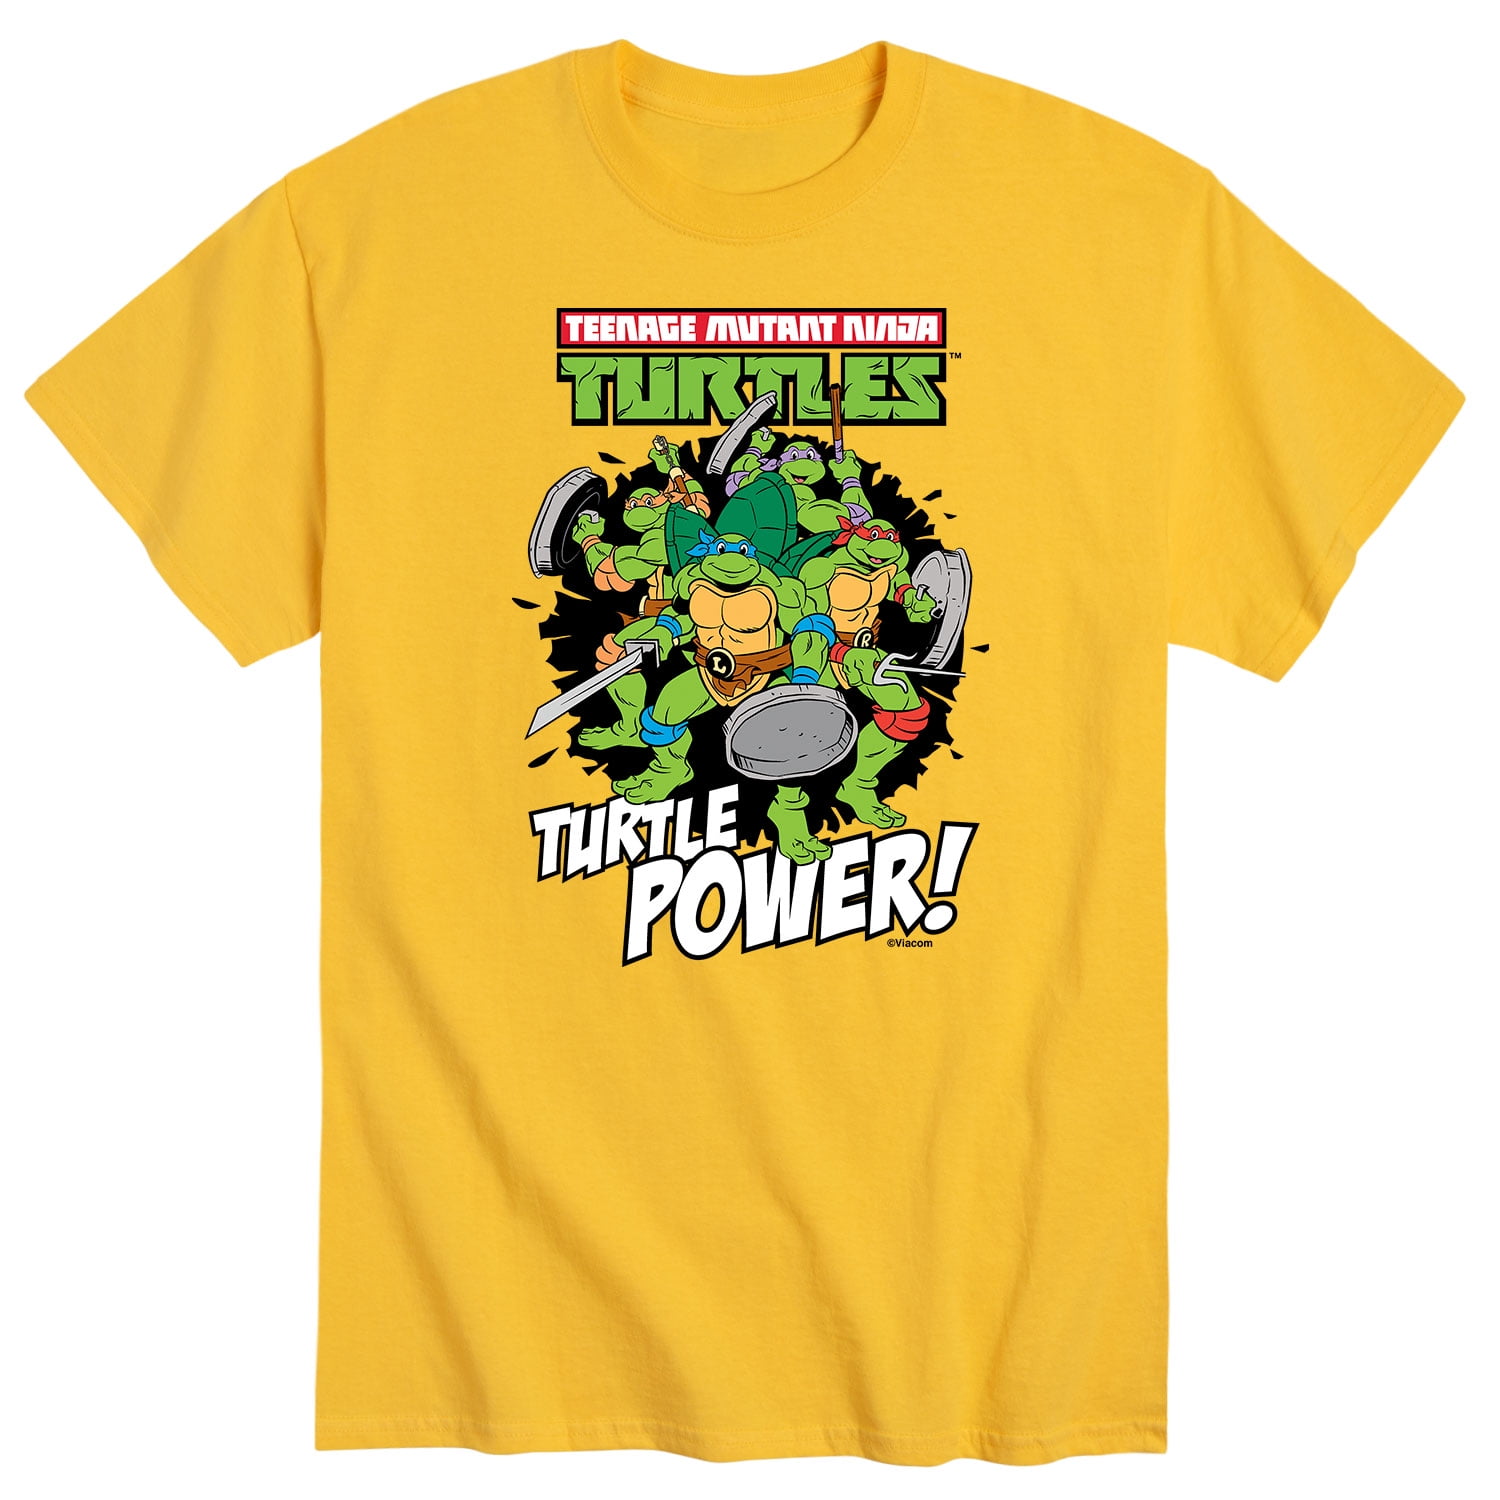 Teenage Mutant Ninja Turtles - Turtle Power - Men's Short Sleeve